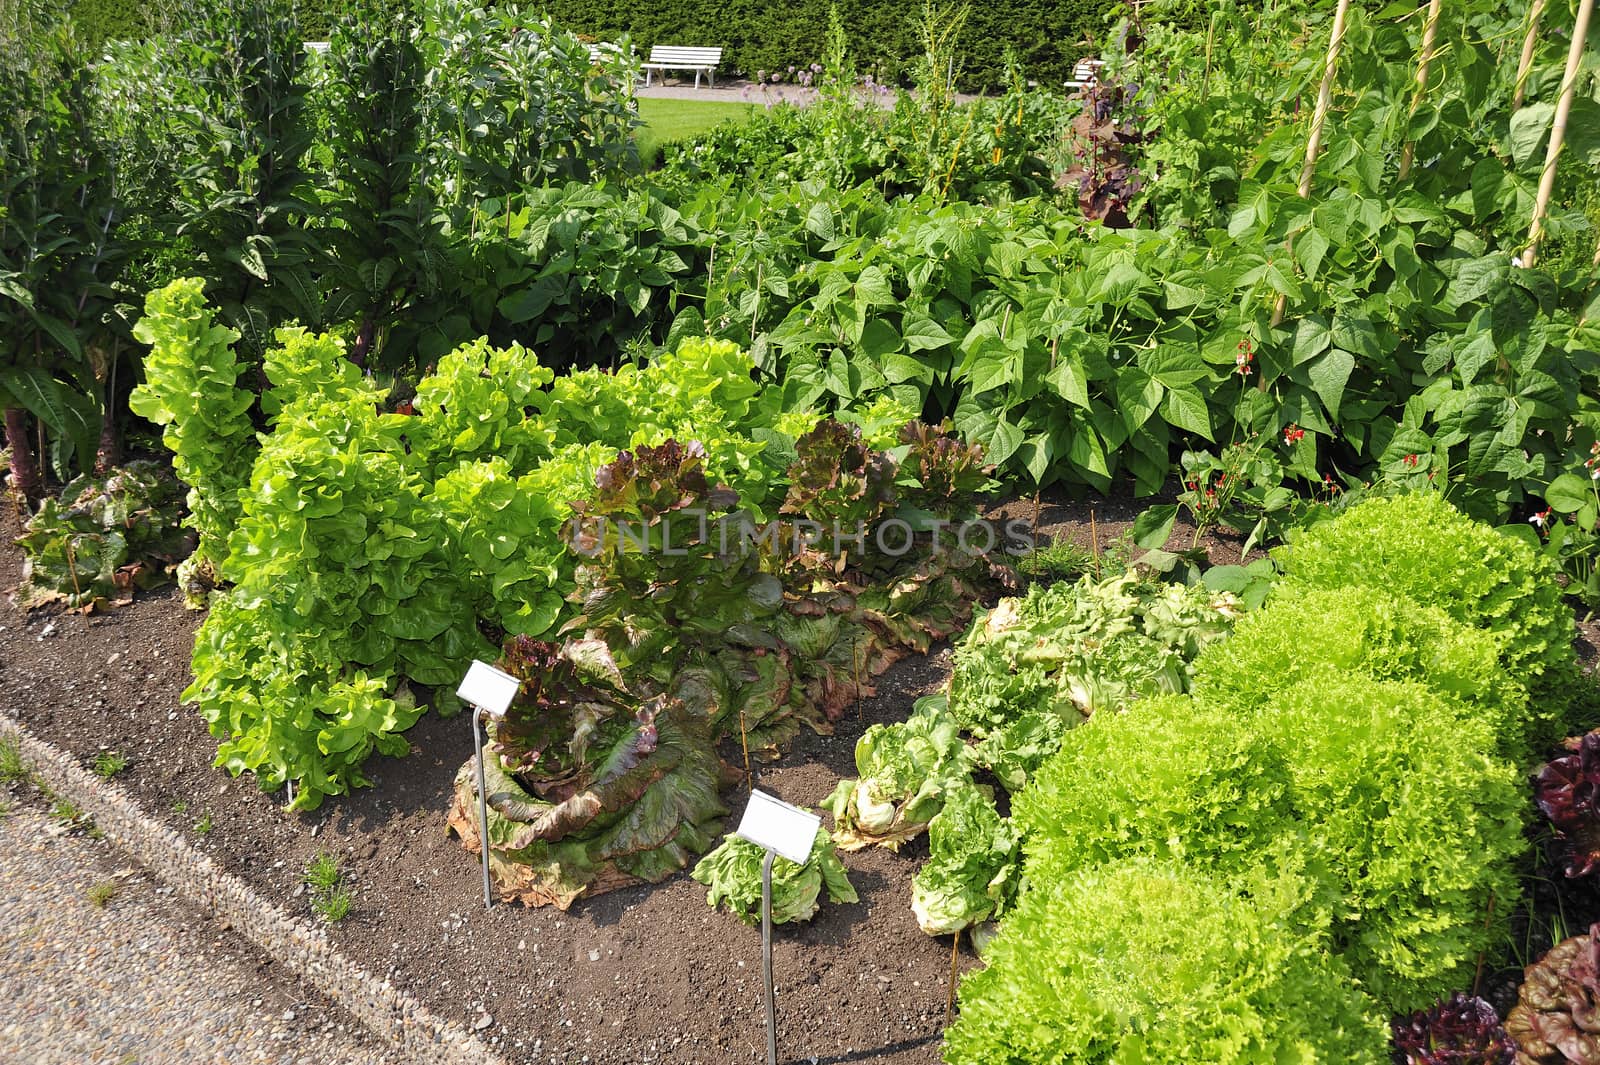 Spring Vegetable Produce Garden by a40757